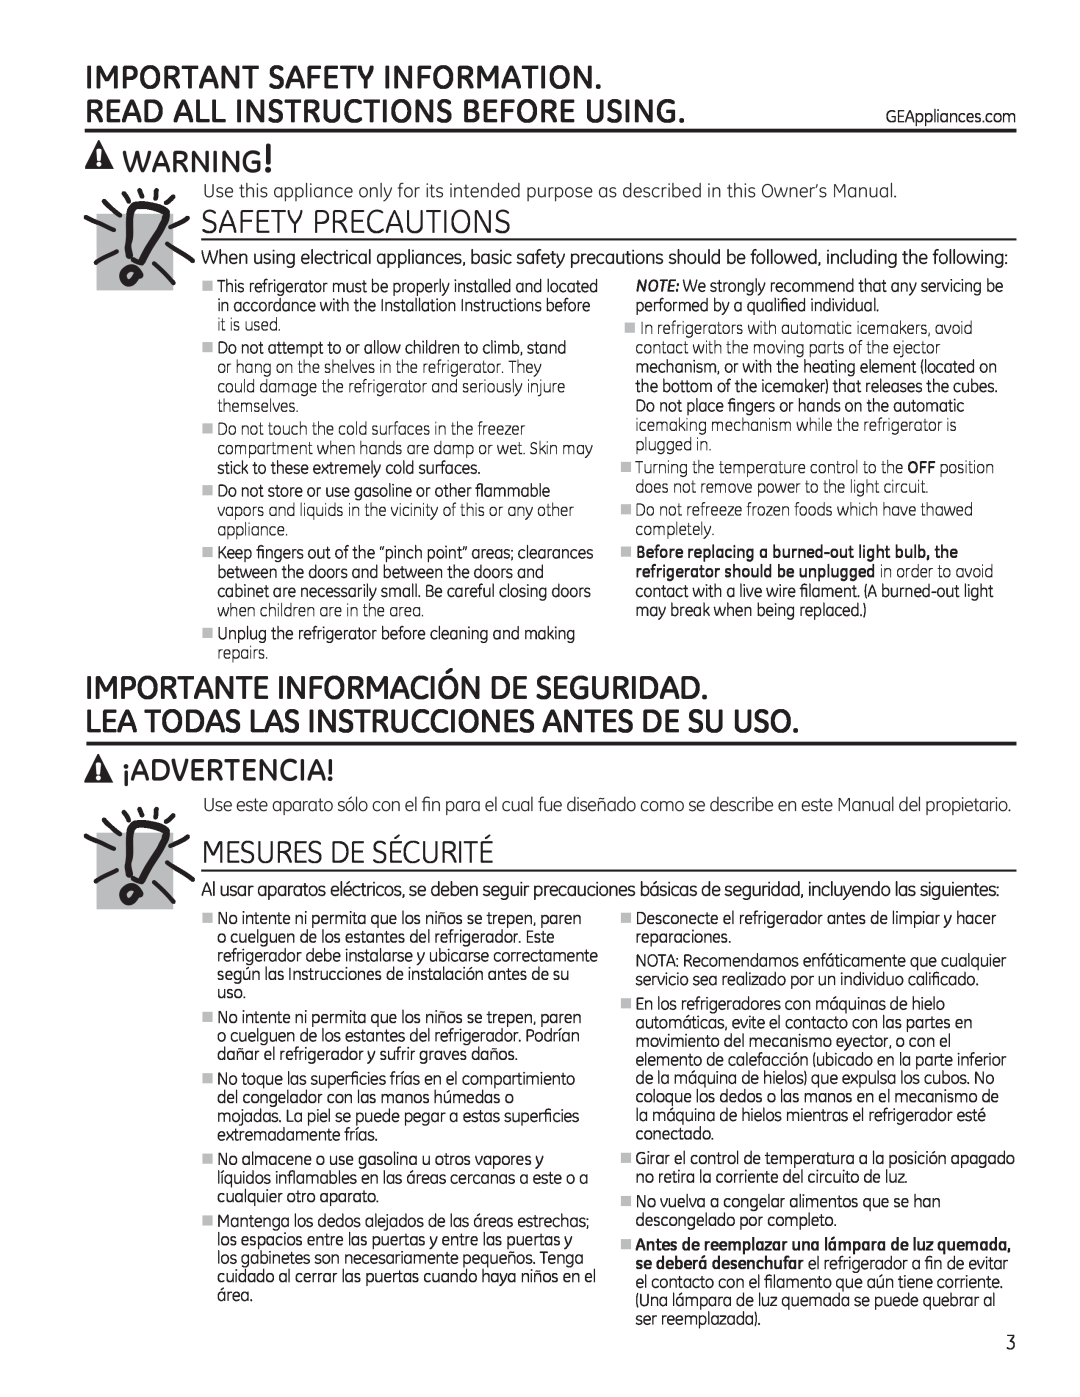 GE 16, 17 installation instructions Safety Precautions, ¡Advertencia, Mesures De Sécurité, Important Safety Information 